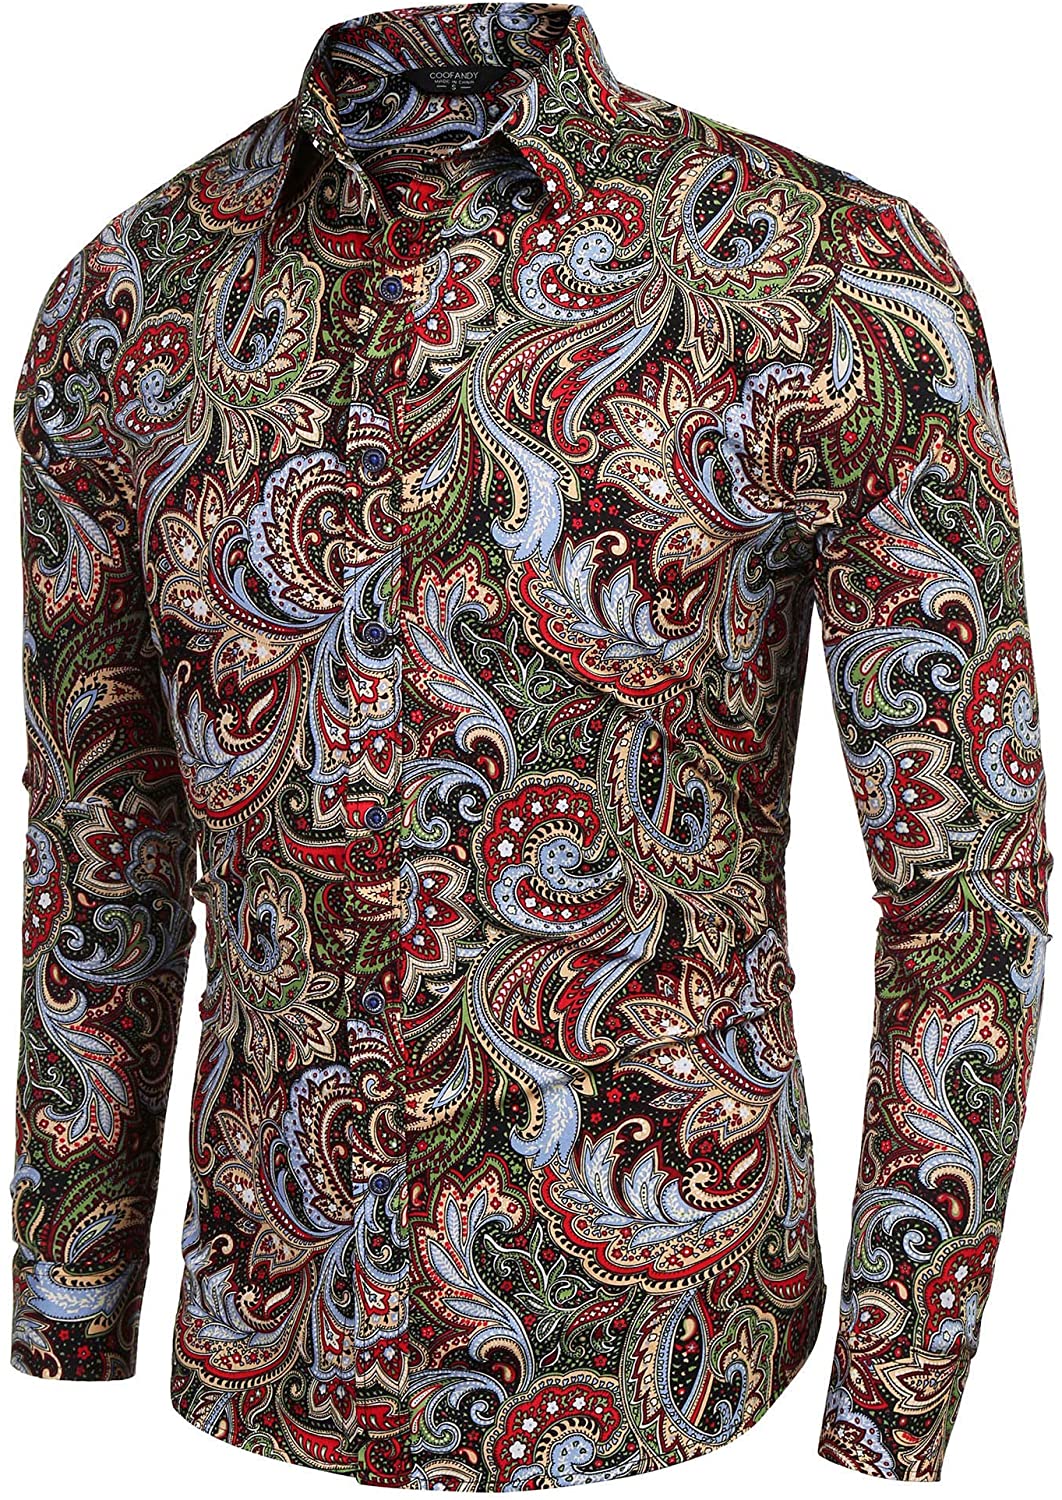 COOFANDY Men's Paisley Cotton Long Sleeve Shirt Floral Print Casual ...